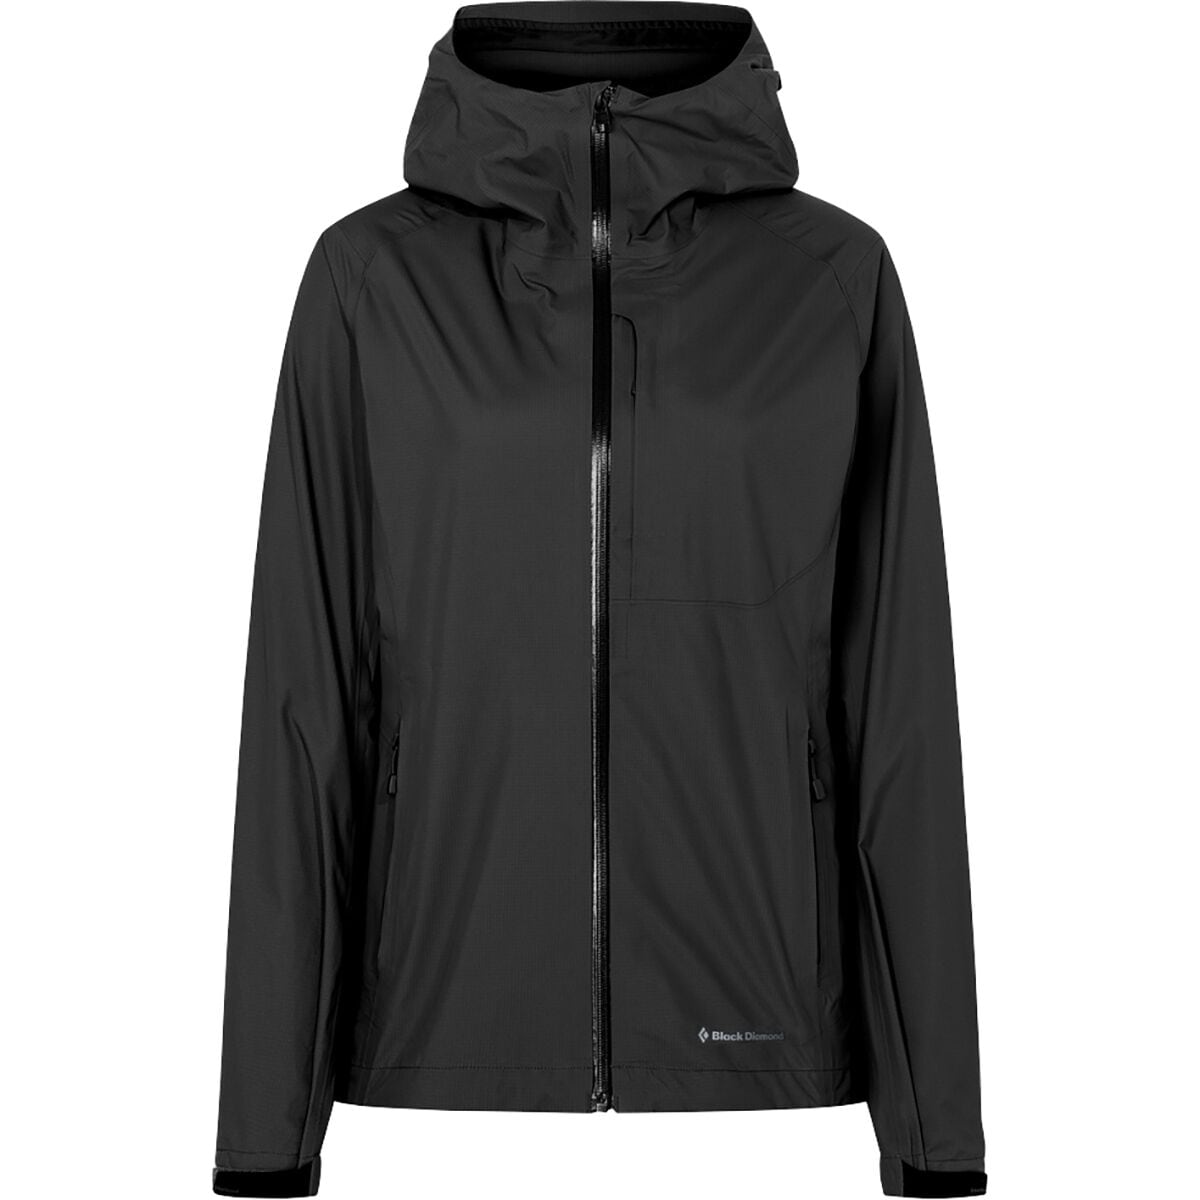 Black Diamond Highline Shell Jacket - Women's - Clothing